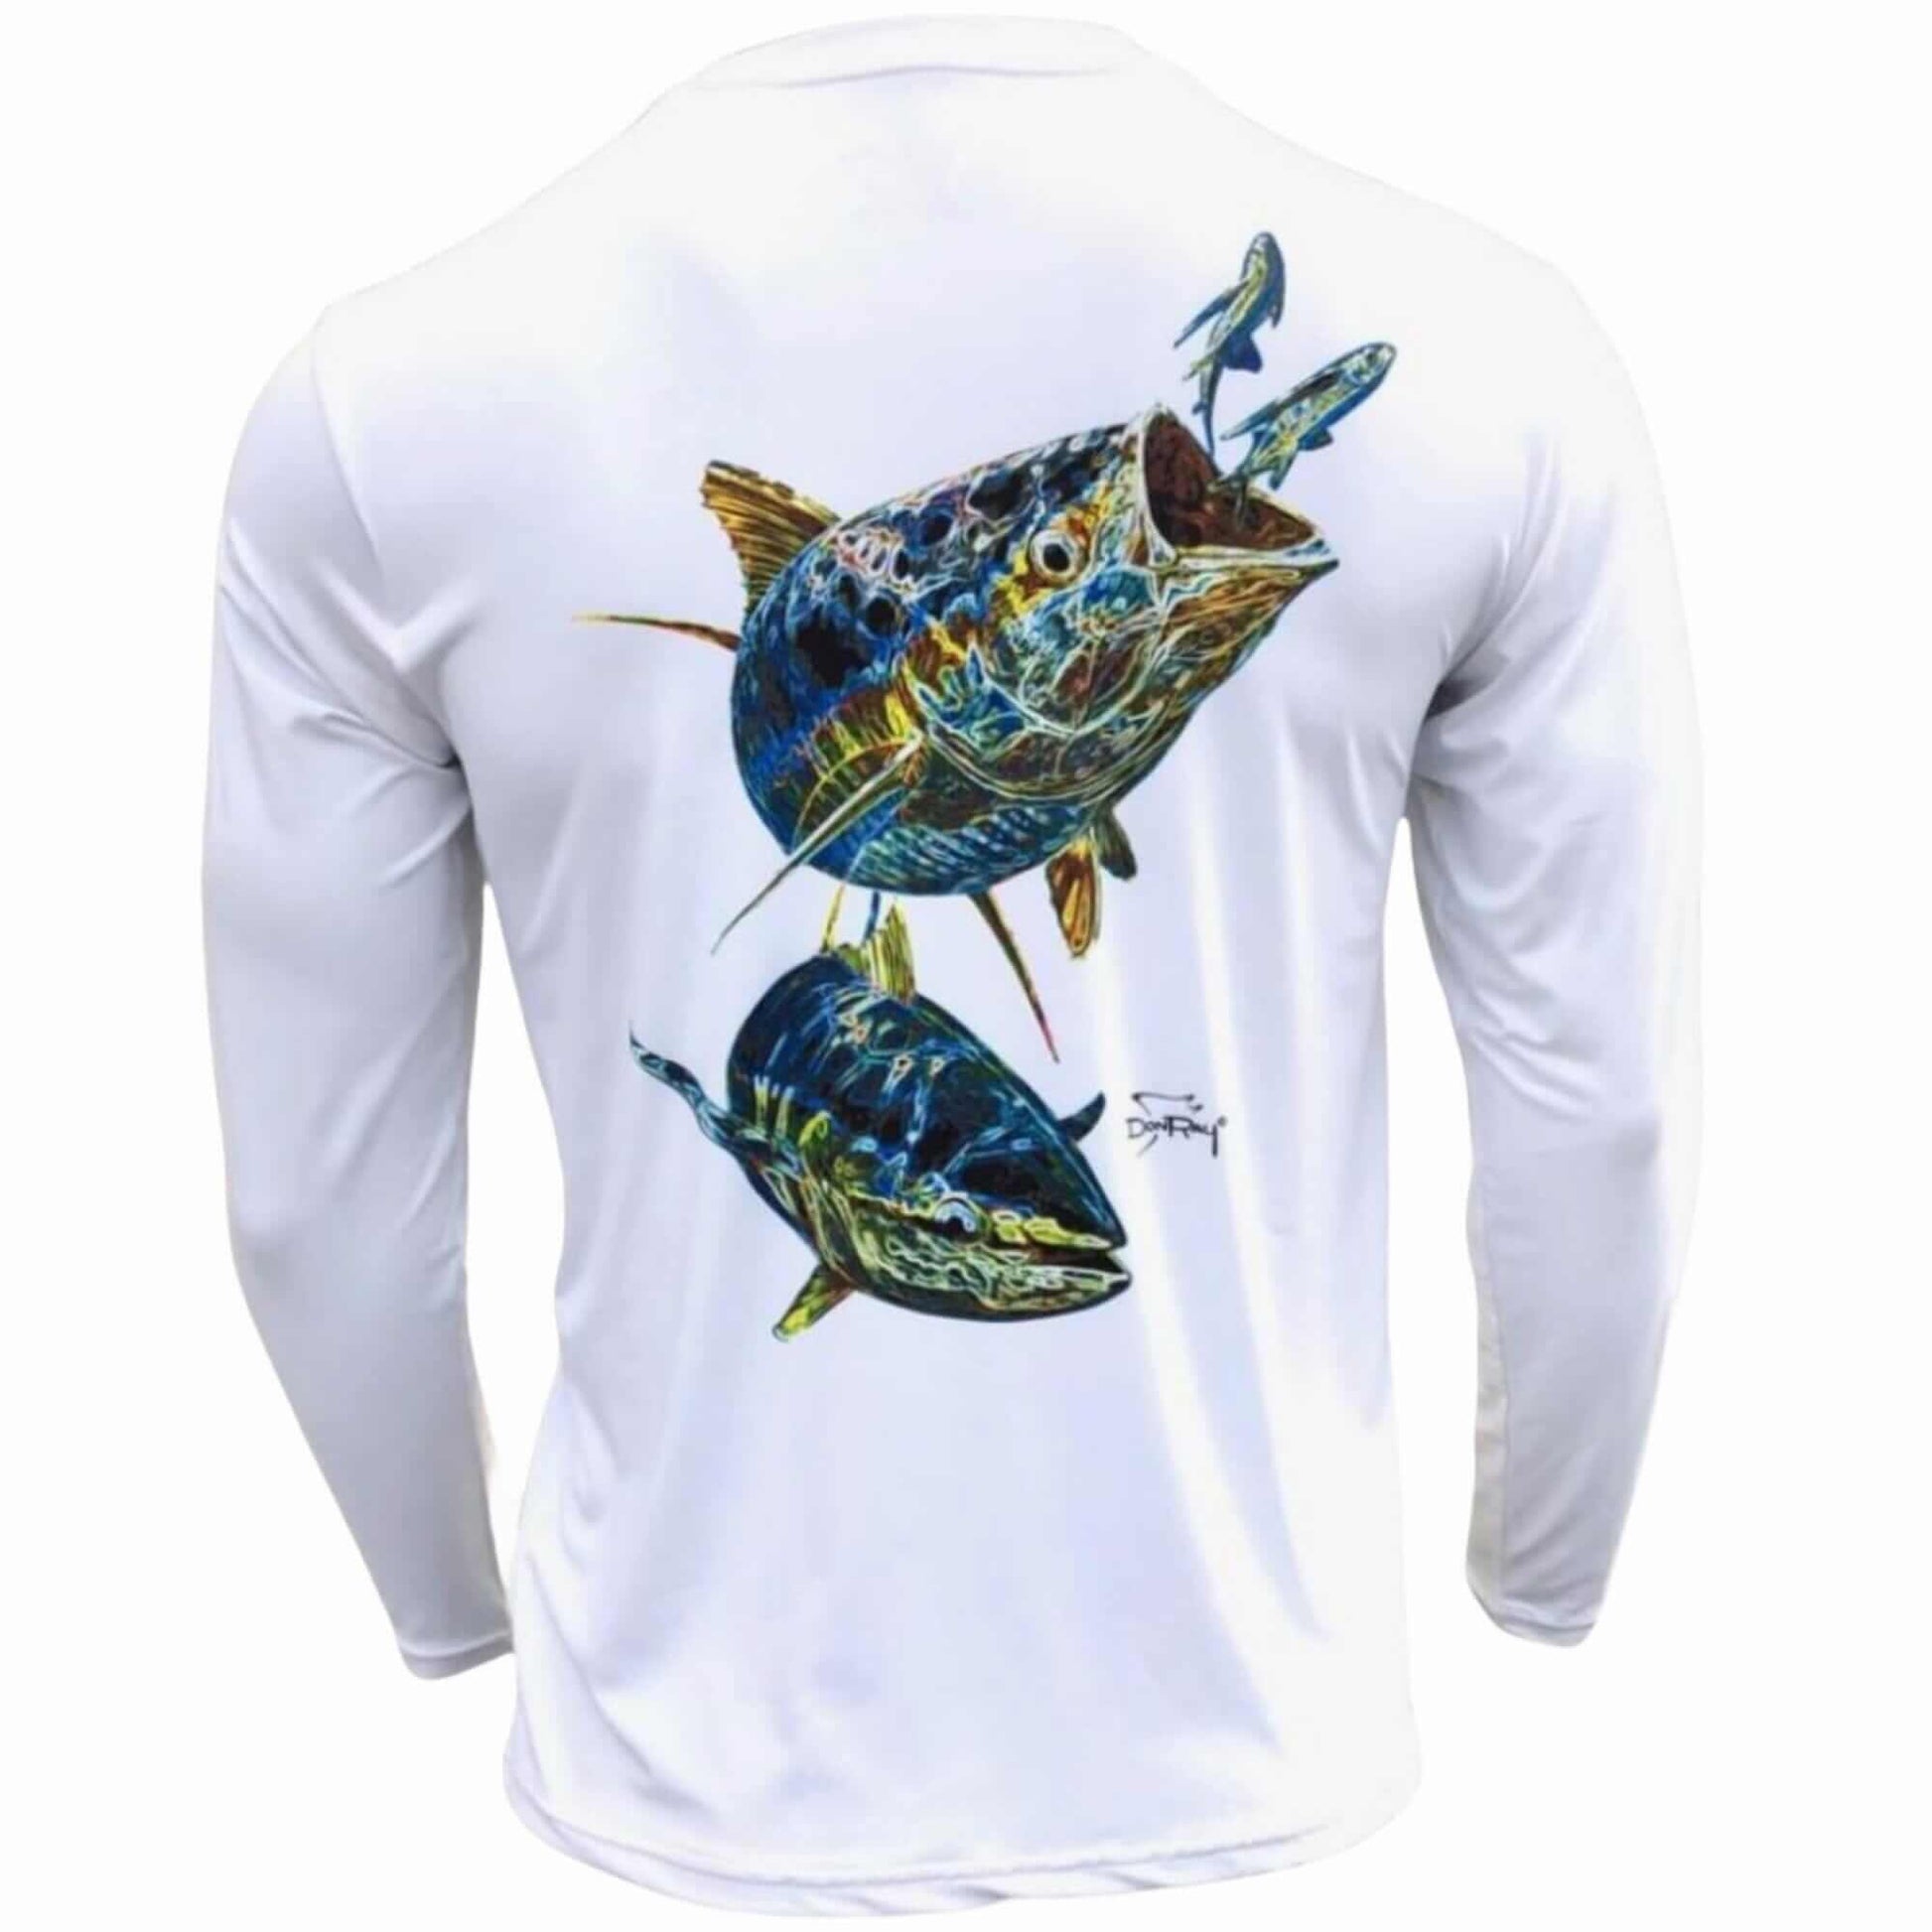 Men's Performance Shirt - Electrified Tuna Men's SPF Ocean Fishing Tops Tormenter Ocean White S 